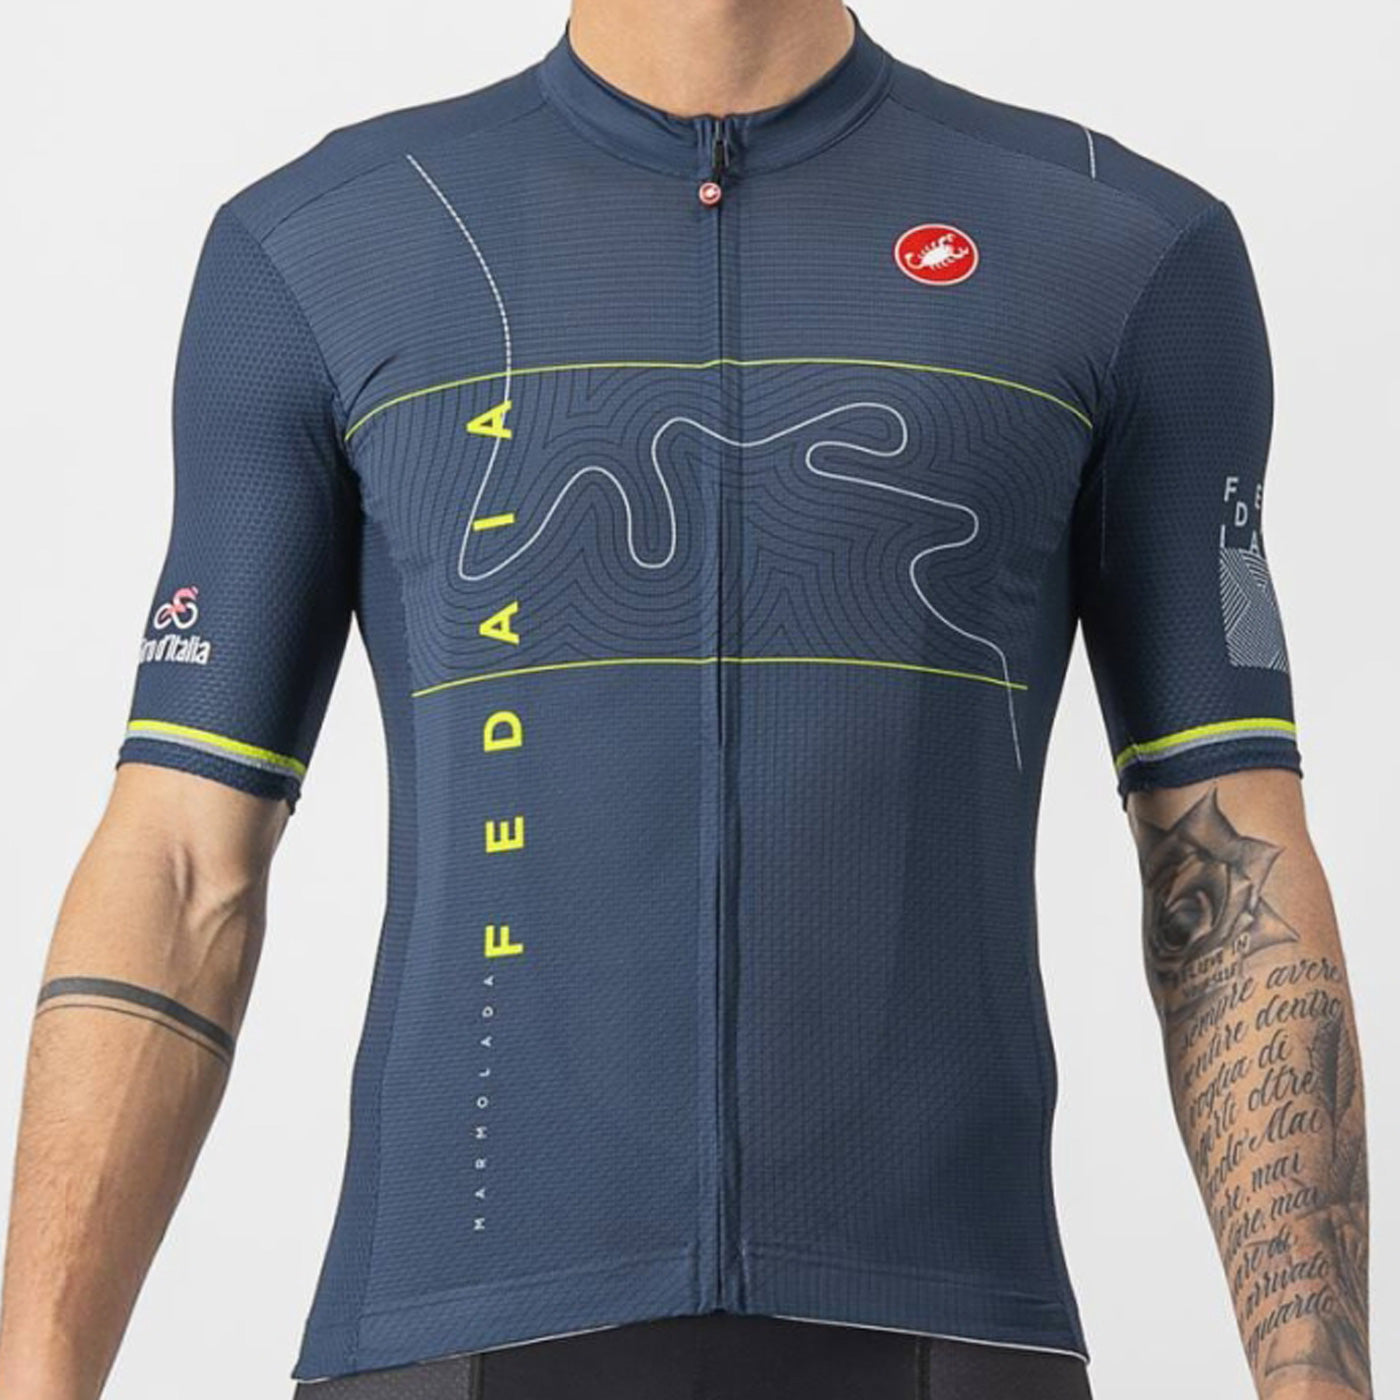 Giro d'Italia Marmolada jersey | All4cycling